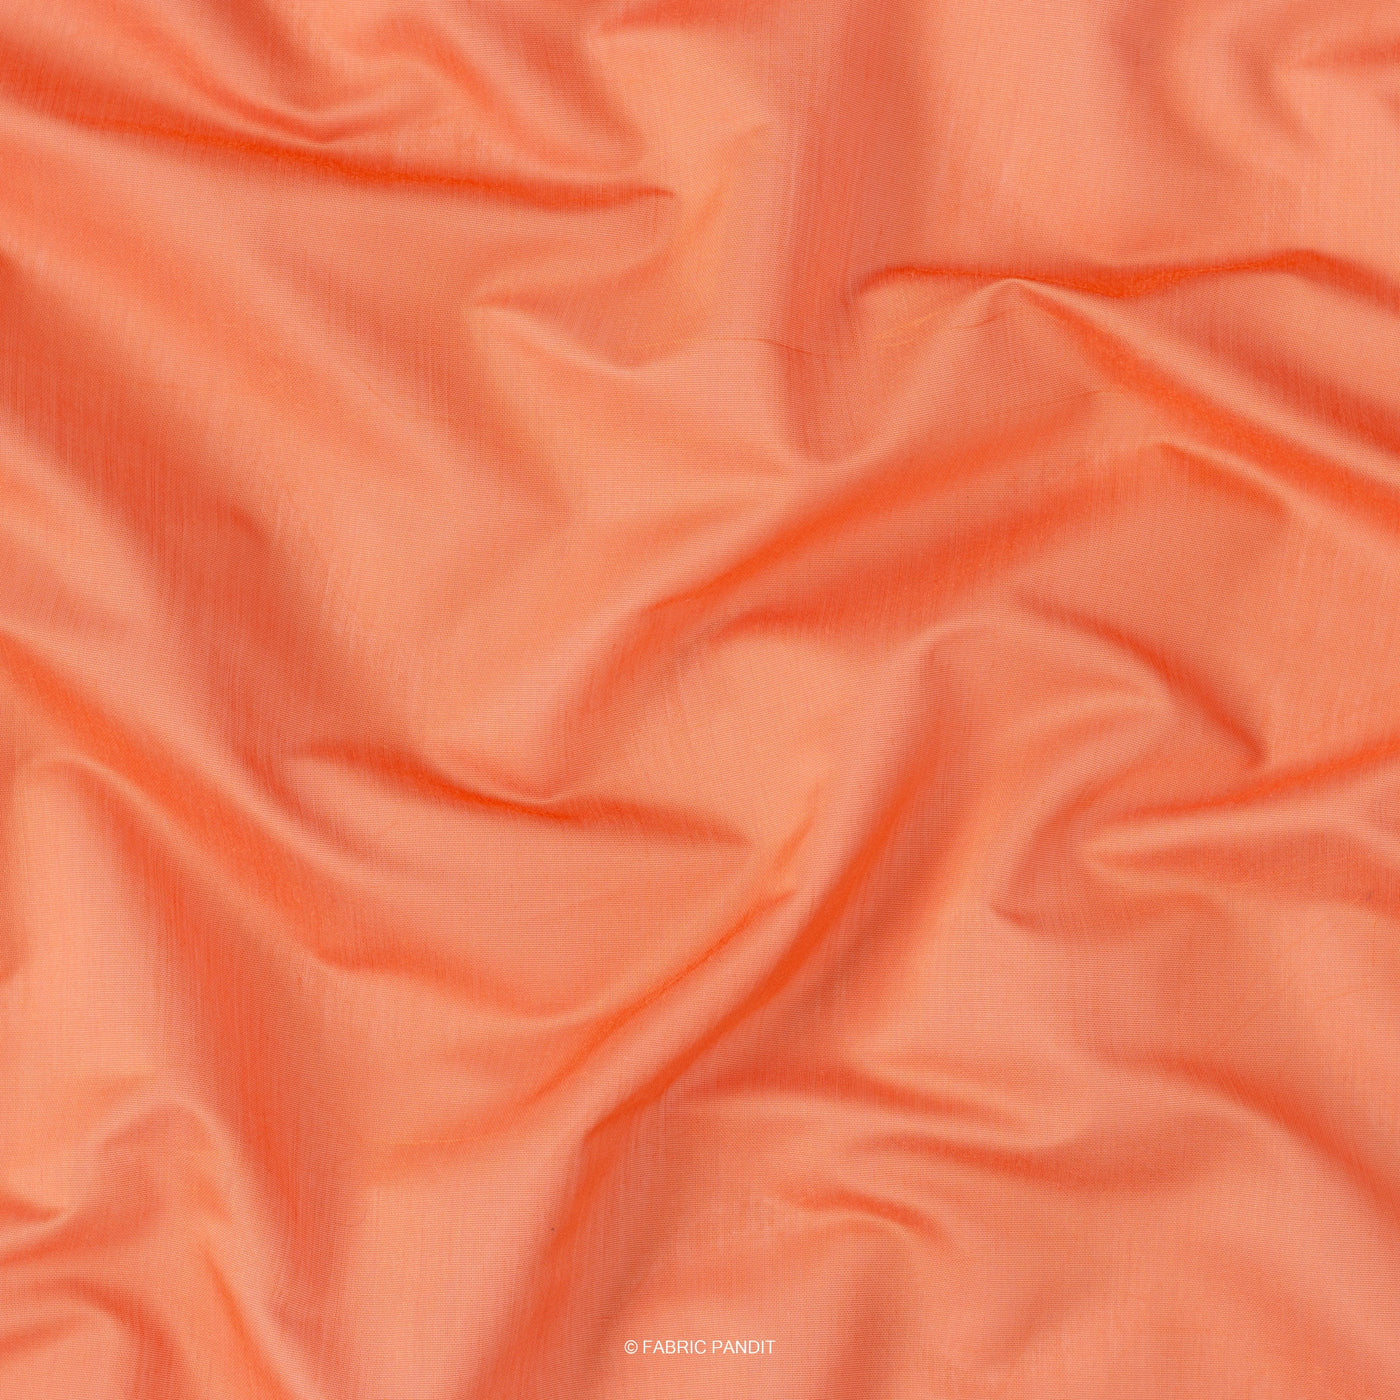 Fabric Pandit Fabric Orange Color Plain Chanderi Fabric (Width 43 Inches)